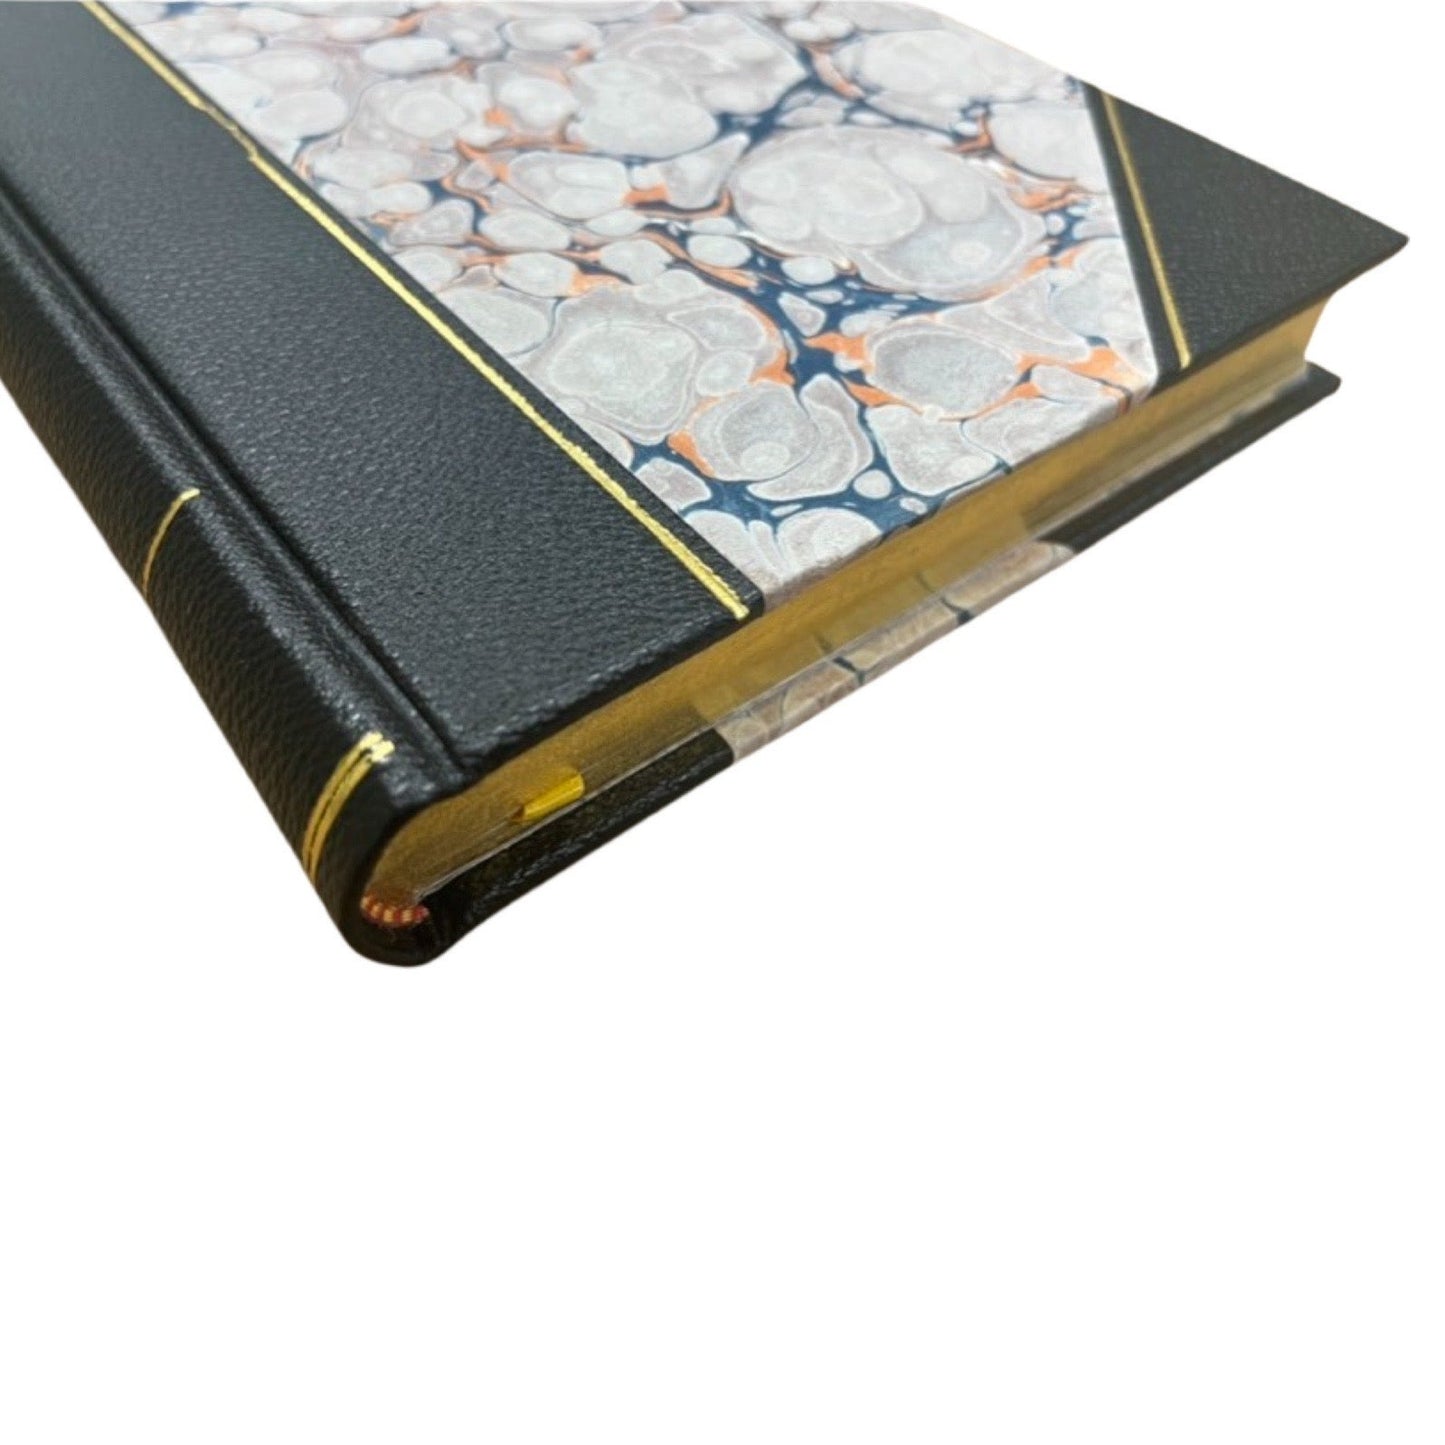 Custom Bookbinding | Luxury Leather Bound Custom Books and Journals | Charing Cross Ltd Bindings | Made in USA